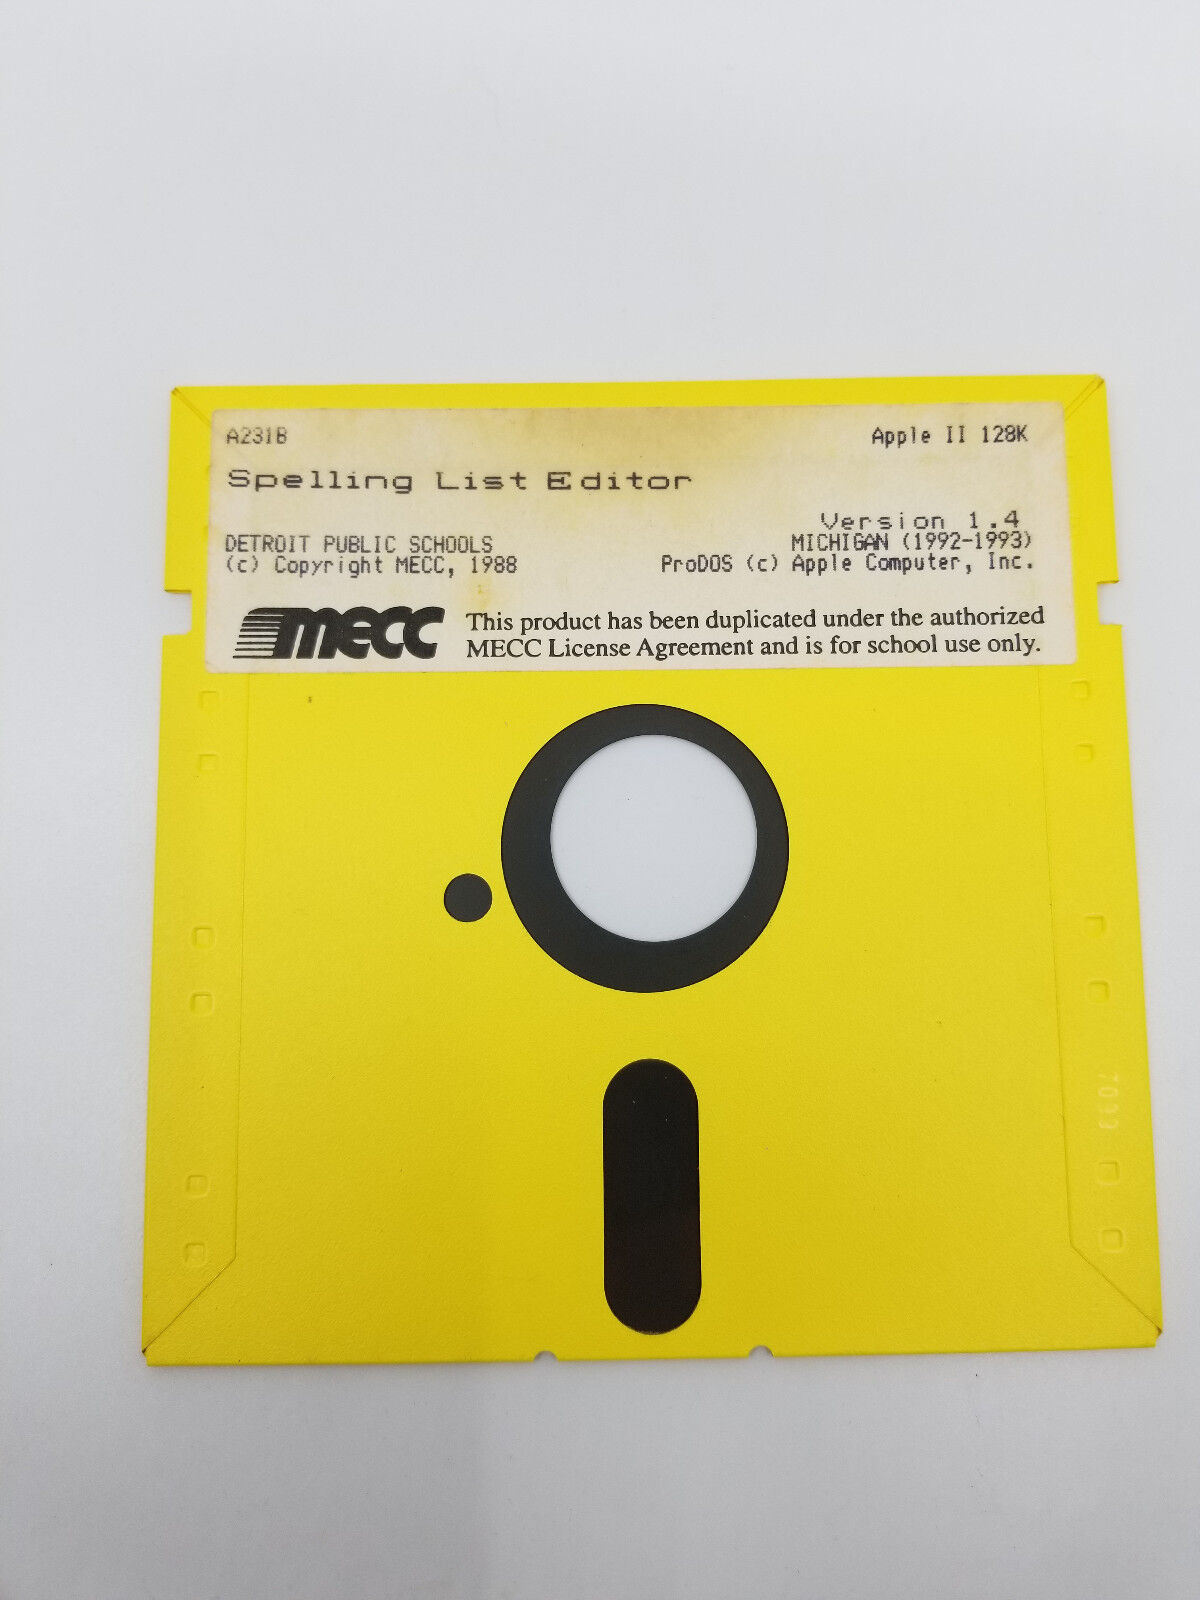 Spelling List Editor Disk by MECC for Apple II Plus, Apple IIe, Apple IIc, IGS